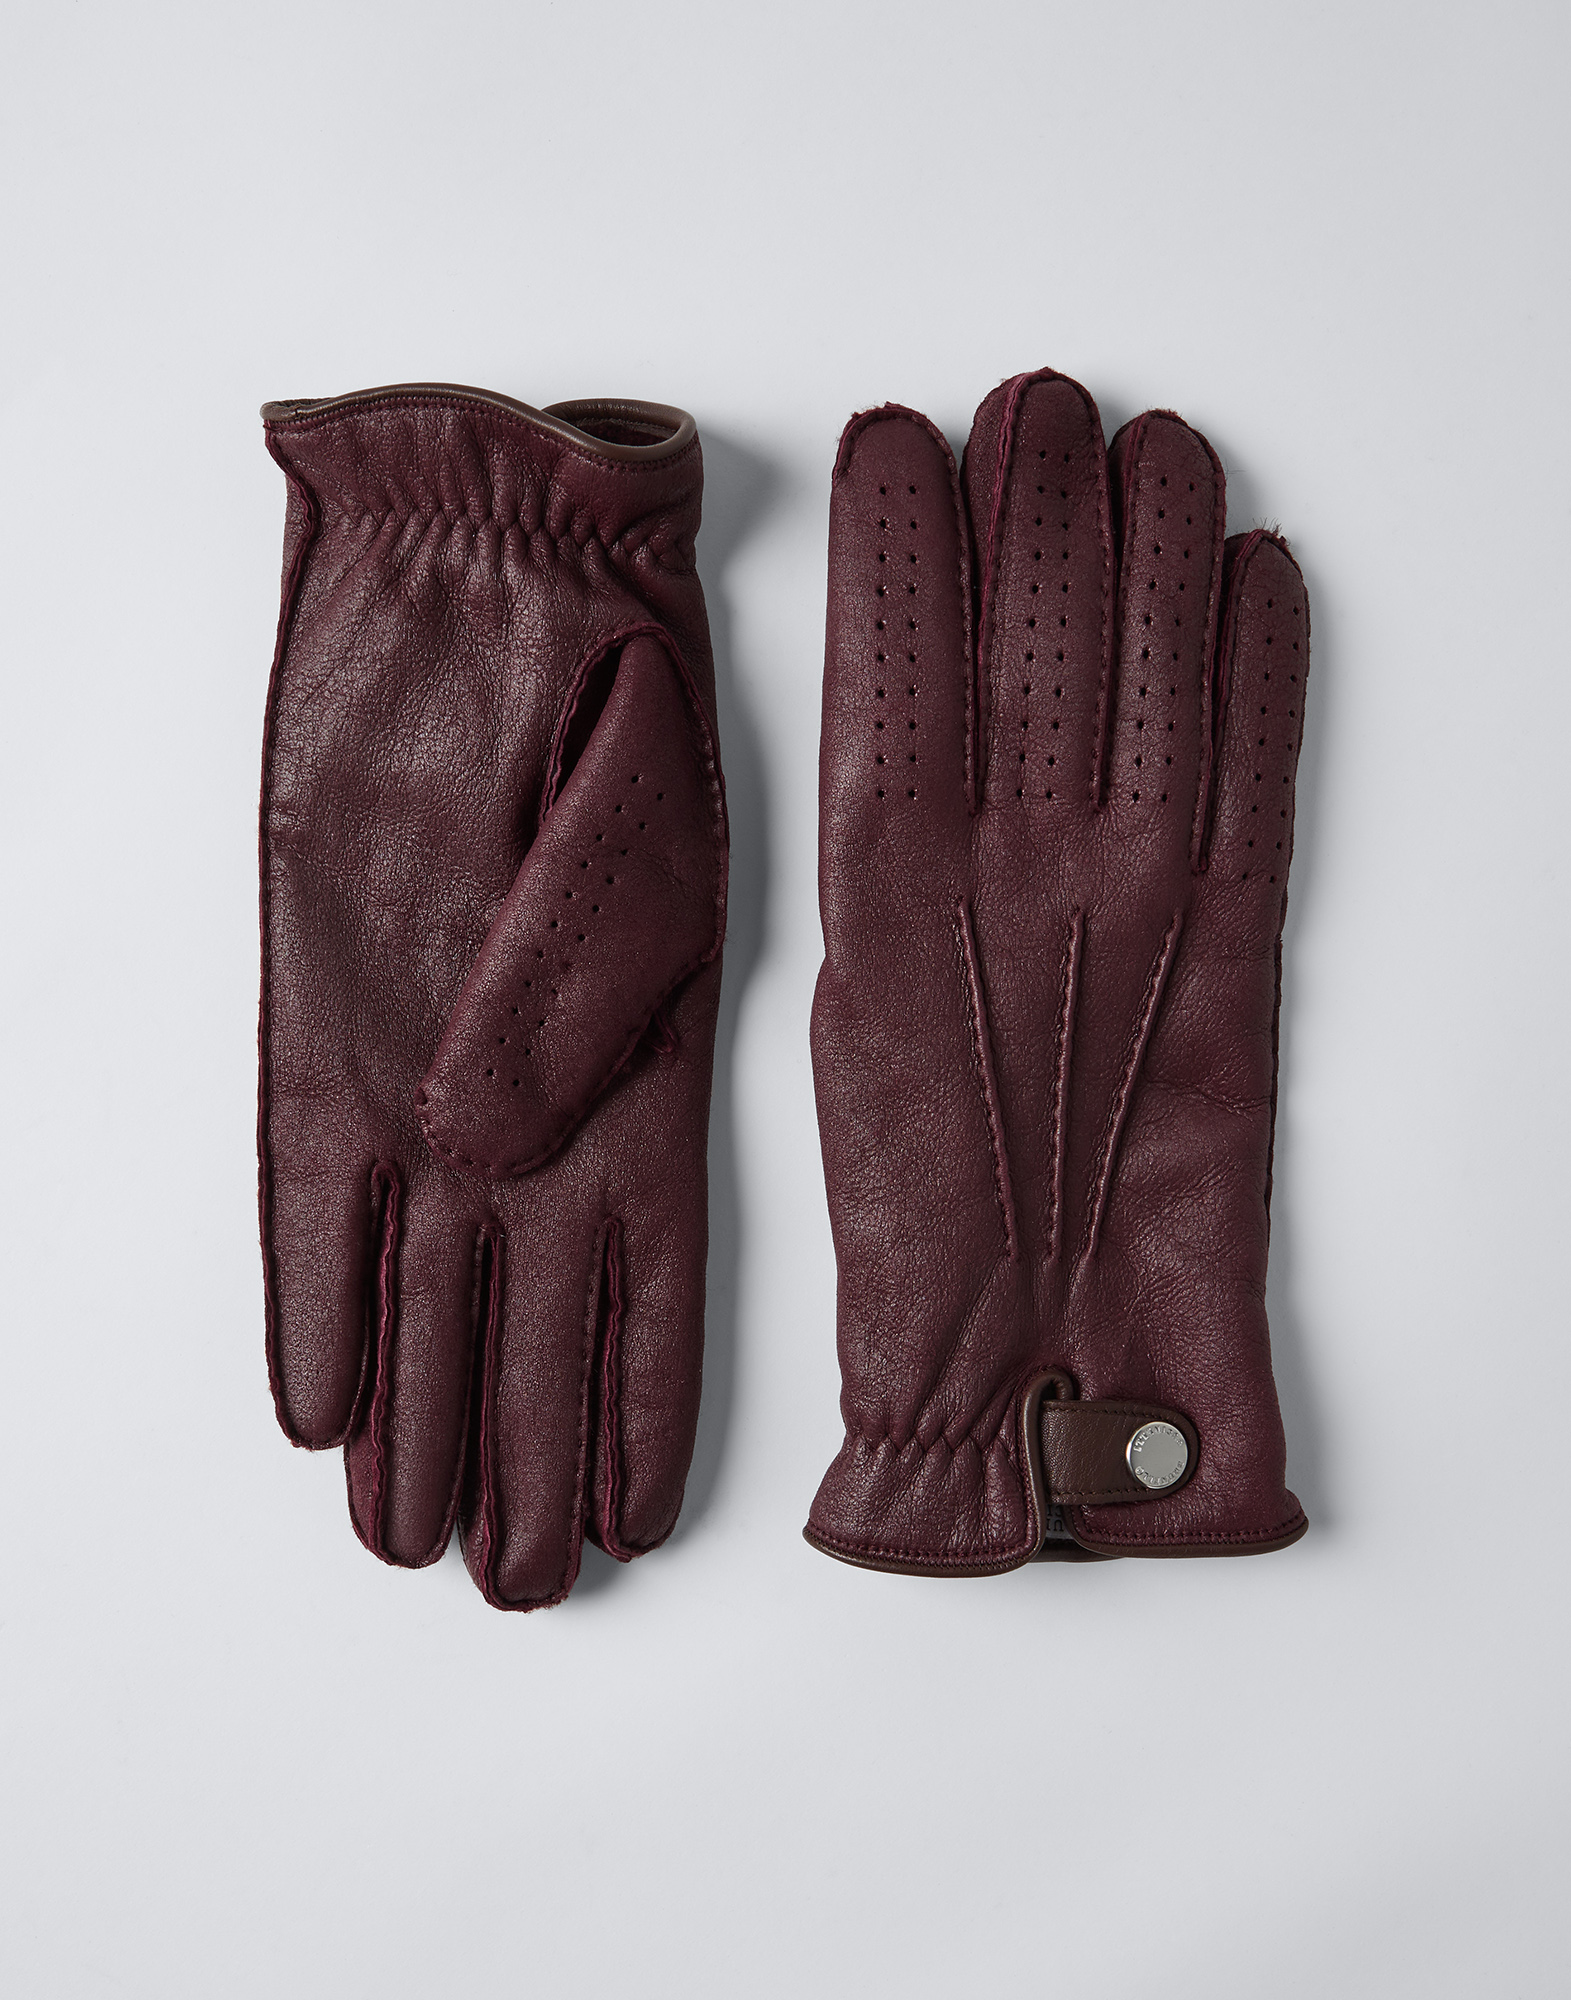 Handschuhe aus Shearling